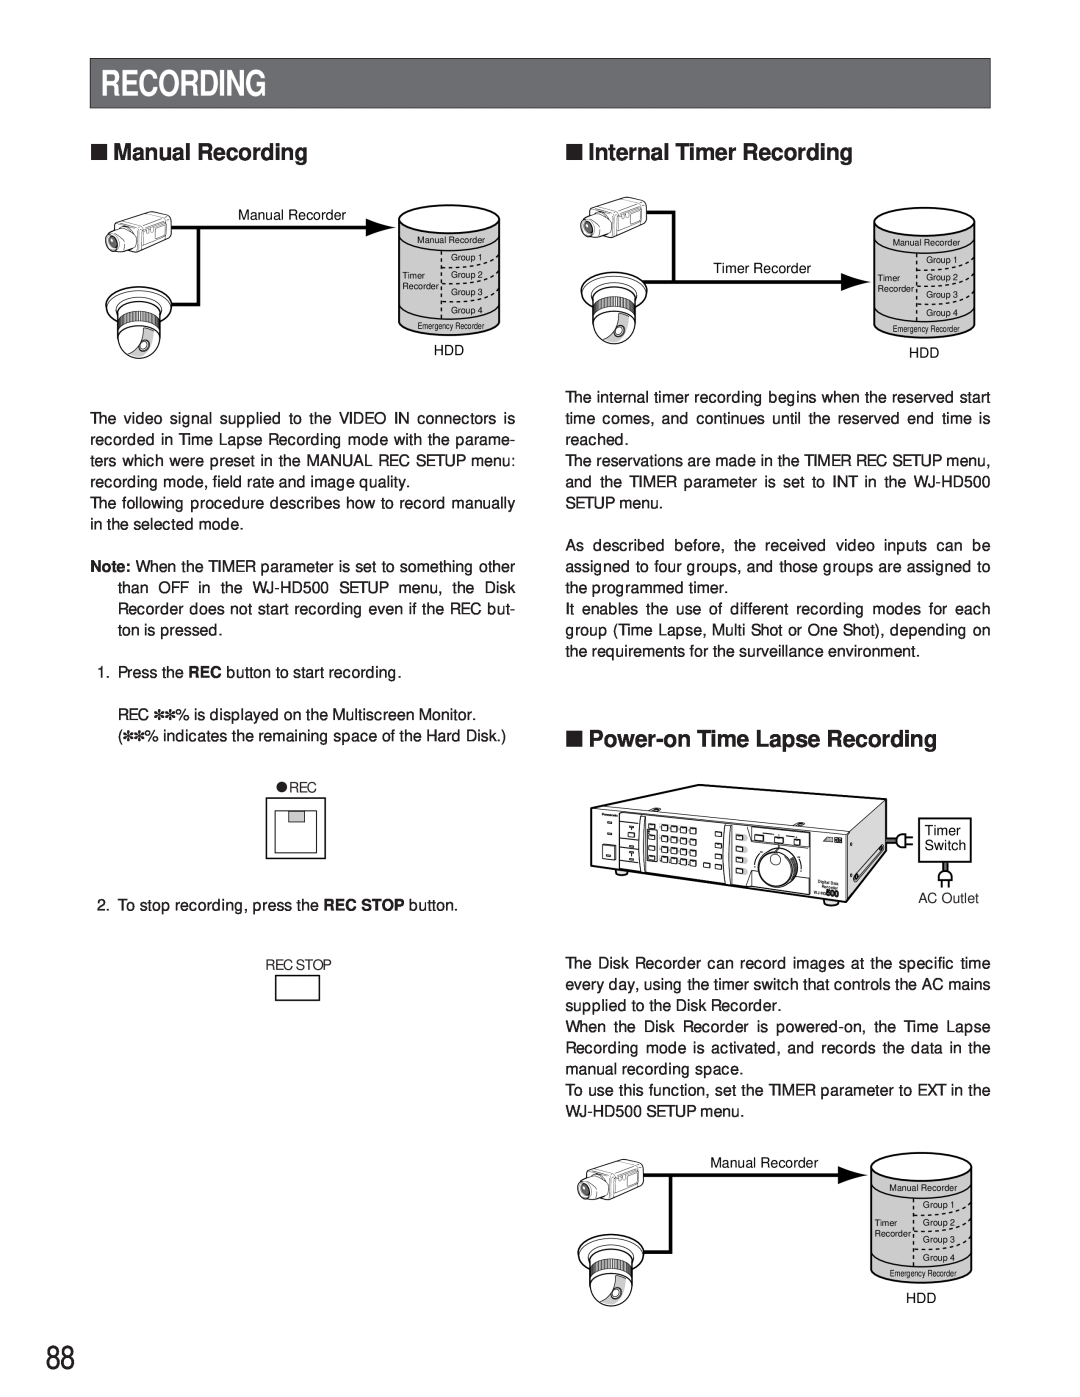 Panasonic WJ-HD500A manual Manual Recording, Internal Timer Recording, Power-on Time Lapse Recording 